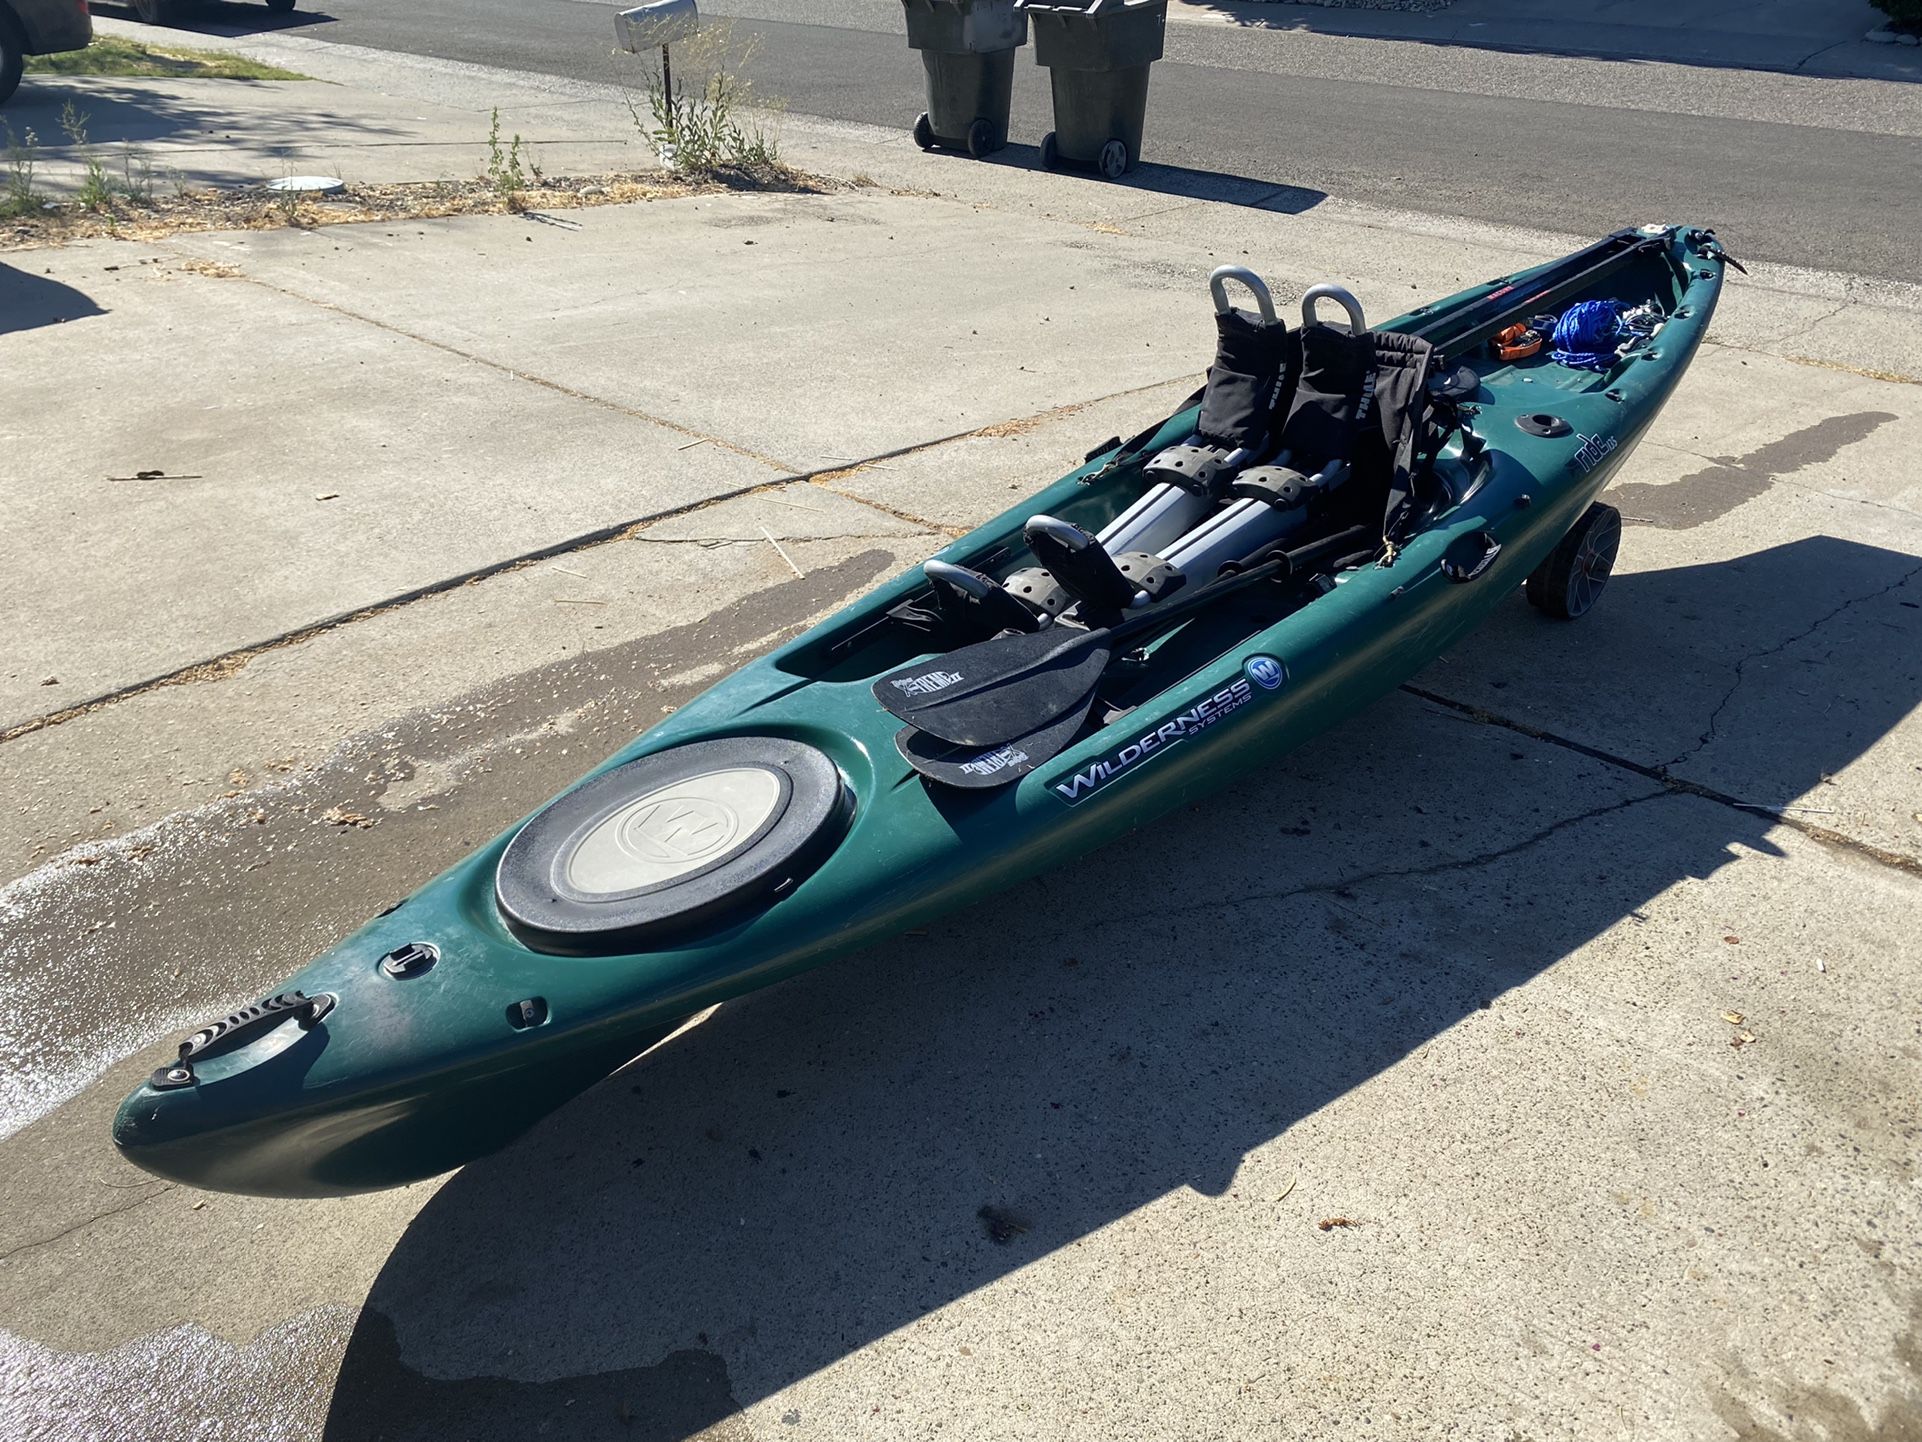 Selling Ocean Kayak 13ft And Gear